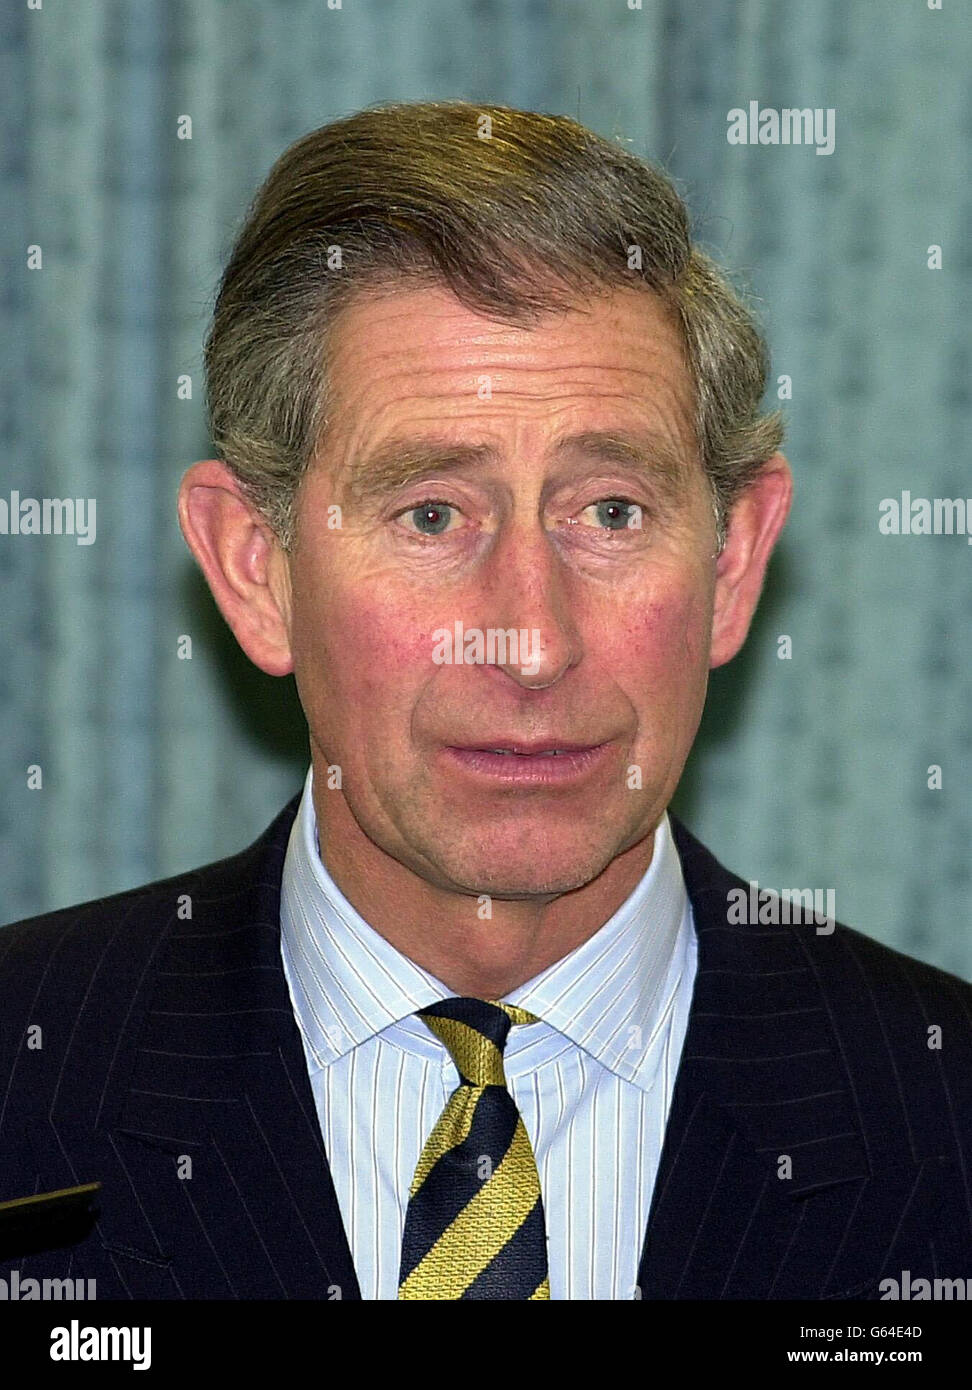 Prince Charles - Health regulation Stock Photo - Alamy